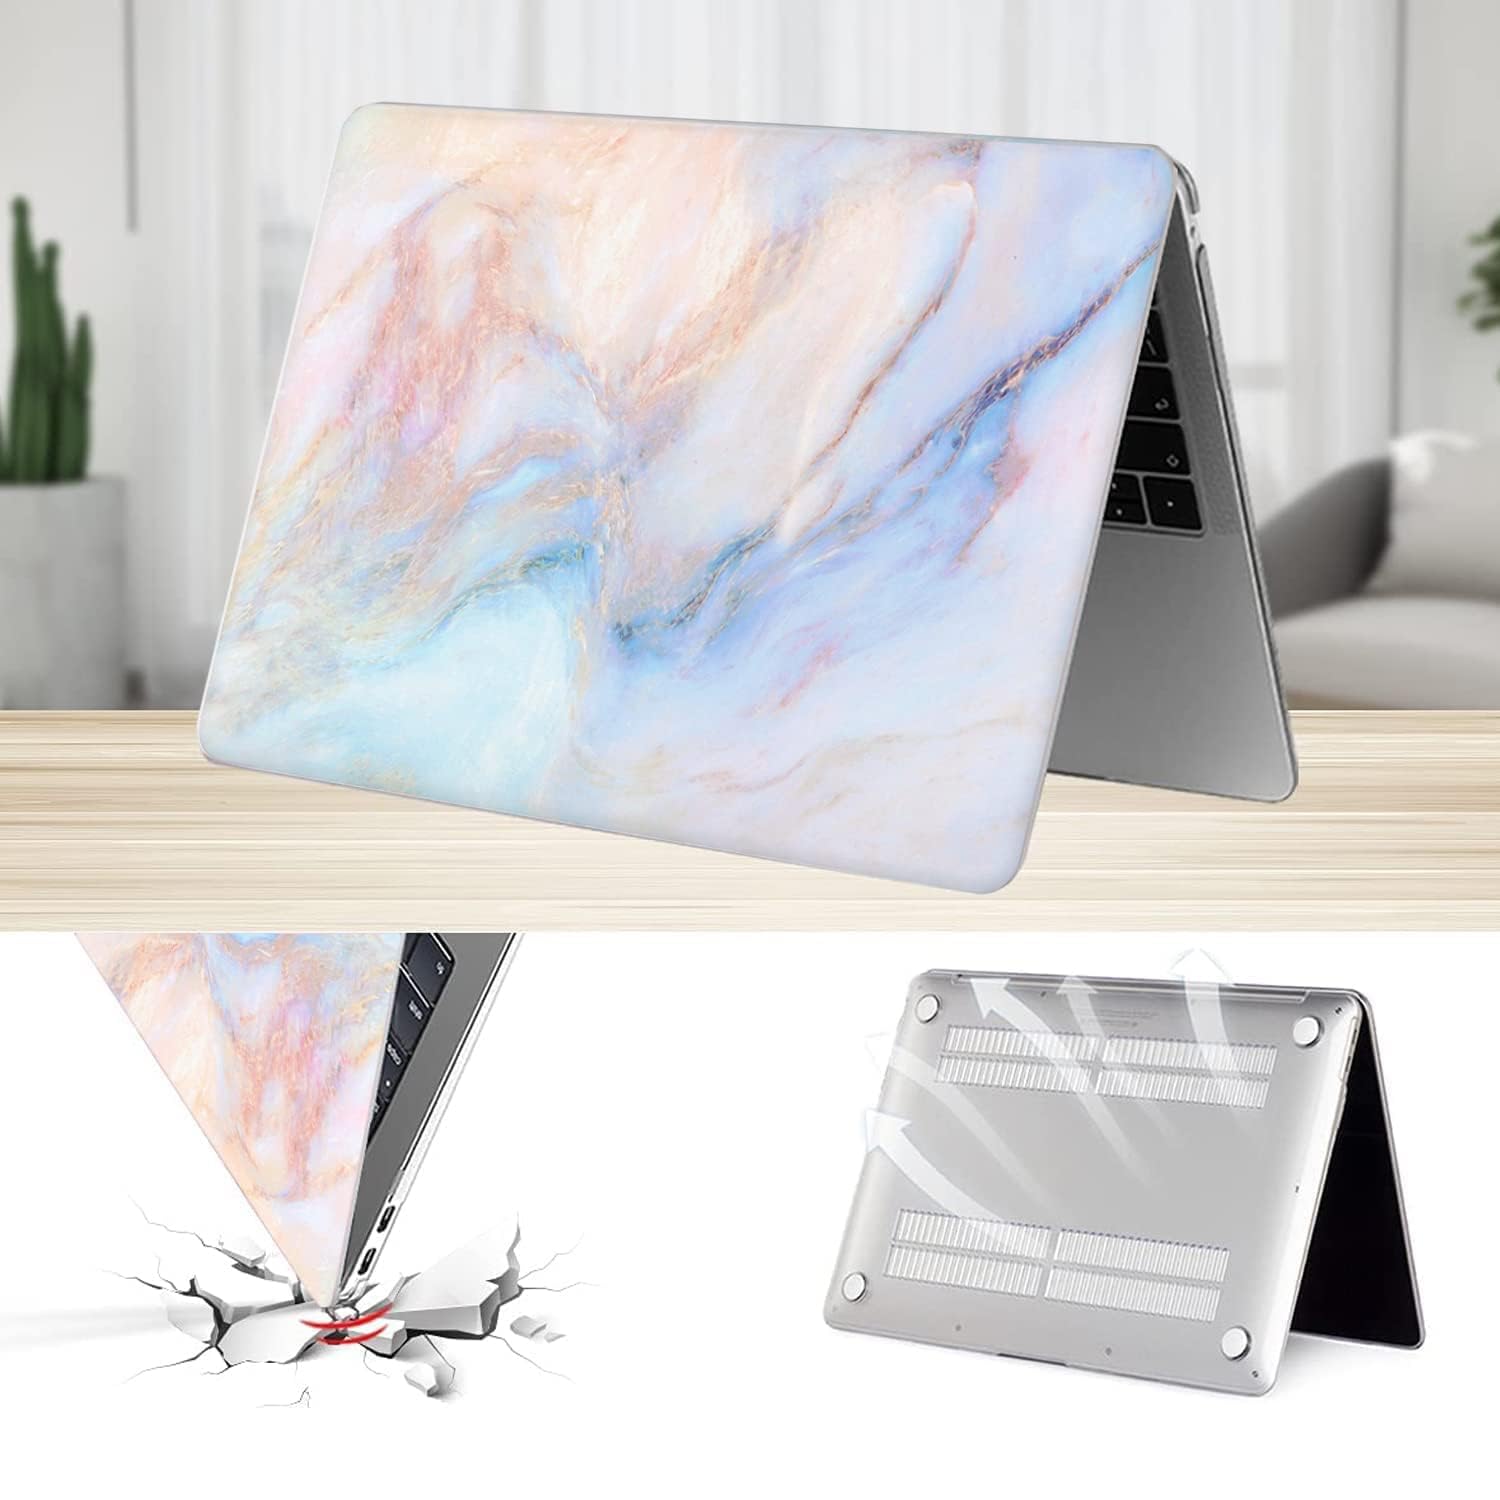 SaharaCase - Apple MacBook Air 13" M1 Chip Laptops Hybrid-Flex Arts Case with Silicon KeyPad Cover - Sleek Hard Shell, Snap-On, Anti-Slip Grip (Blue Marble)